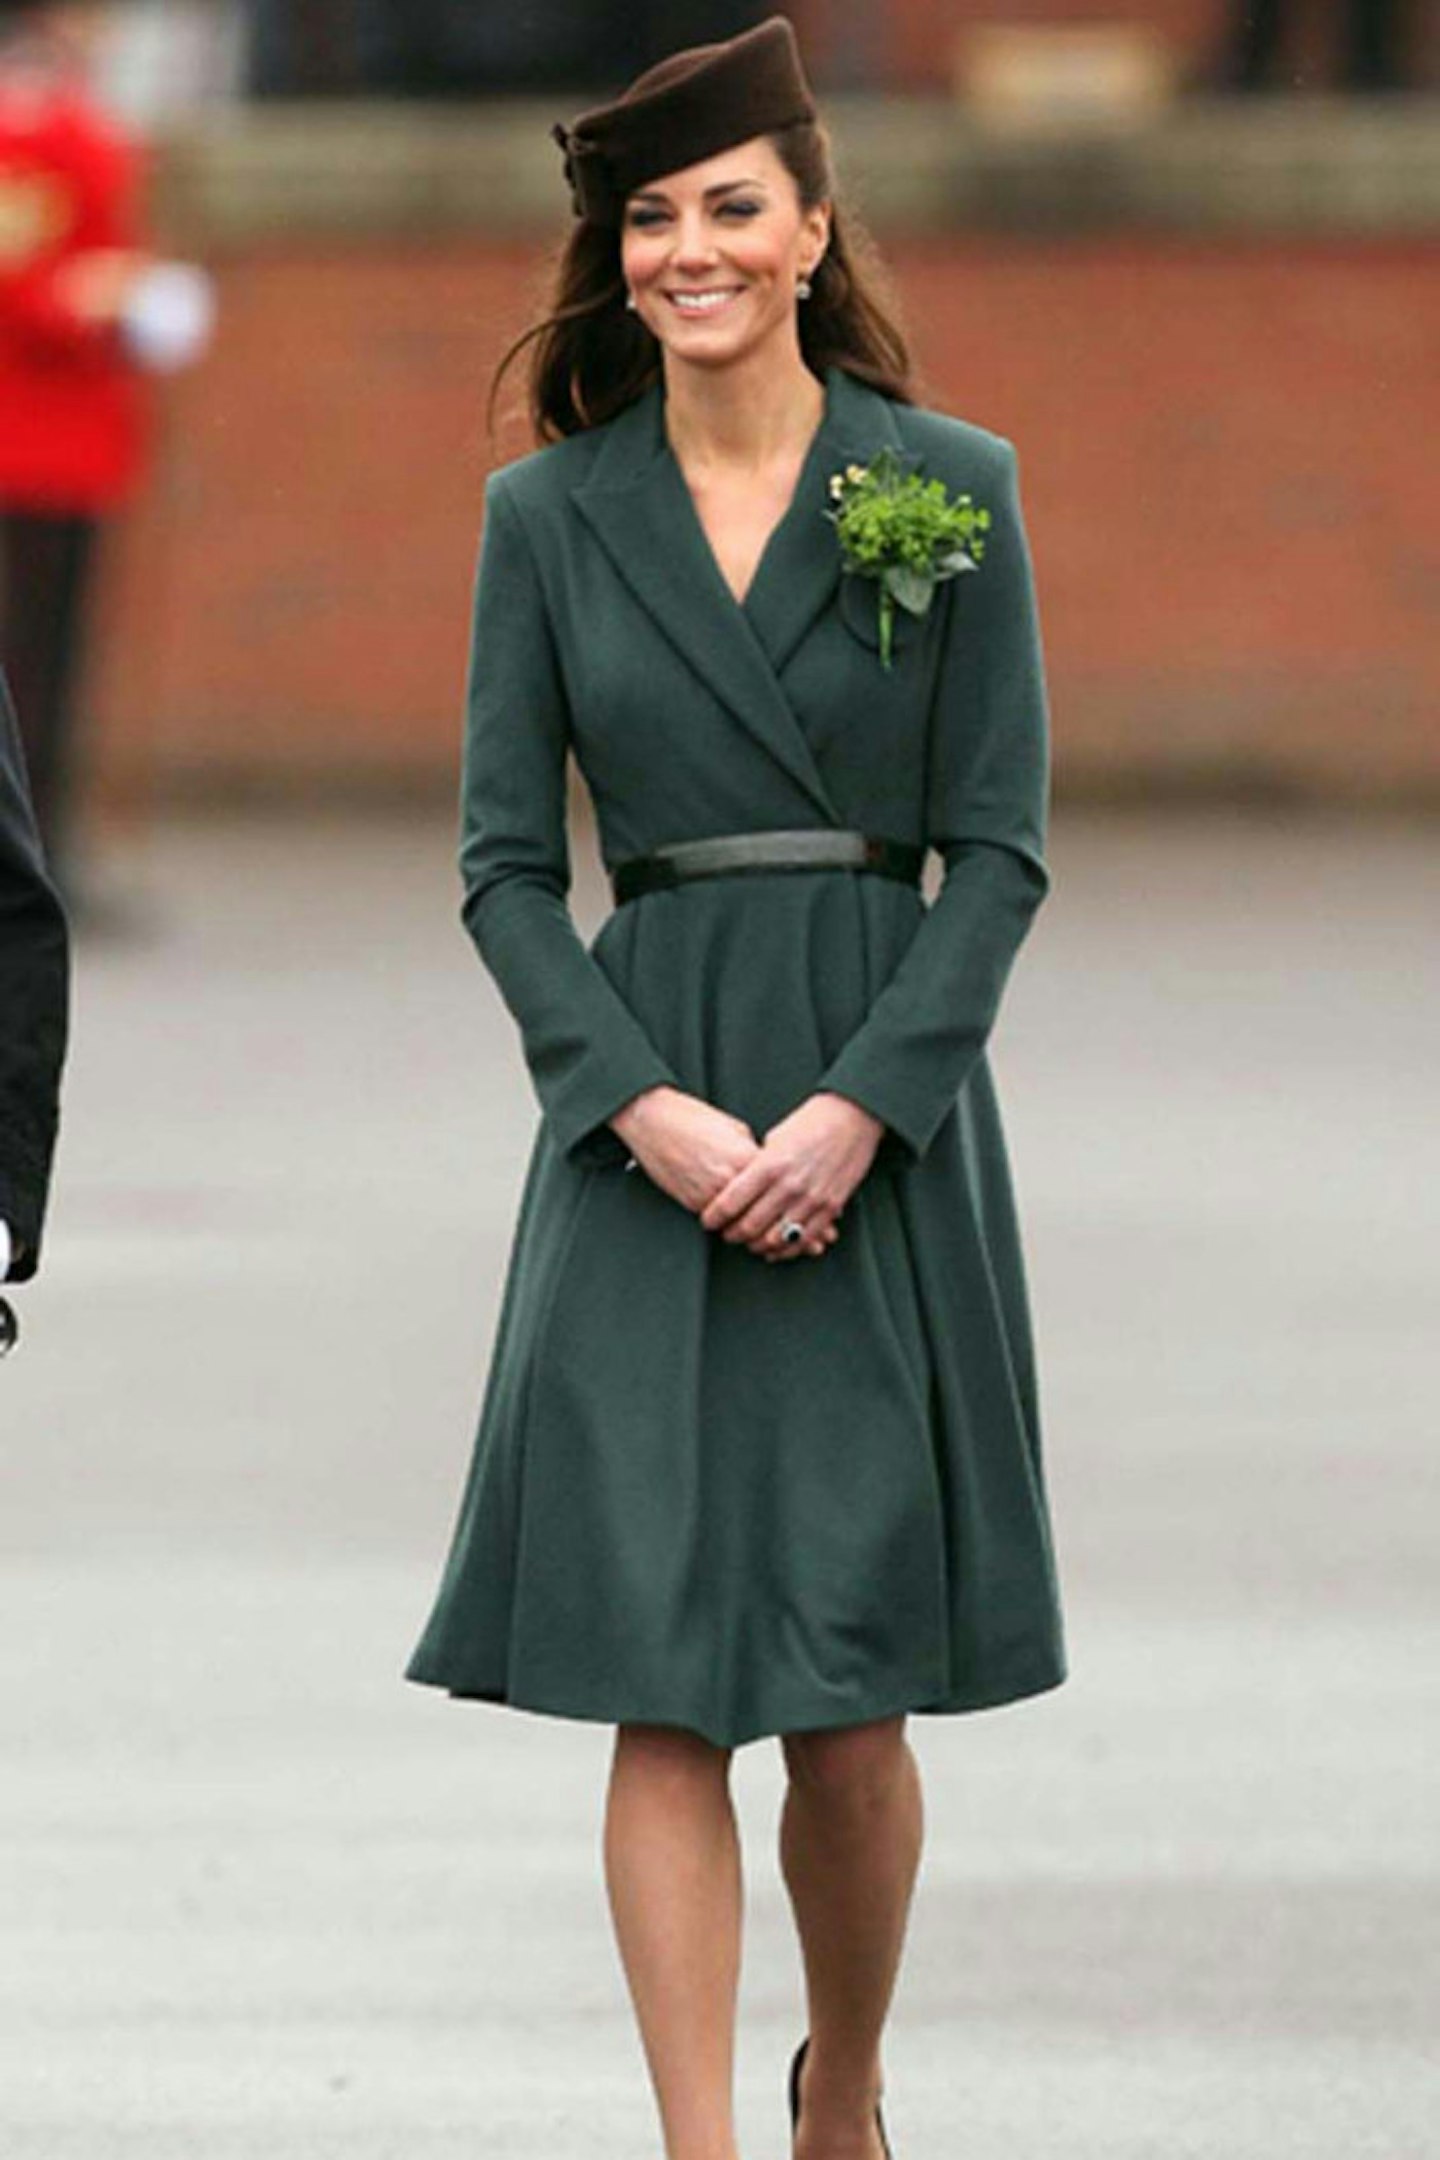 Kate Middleton wearing Emilia Wickstead, Presenting Shamrocks In Aldershot, St. Patrick's Day, 17 March 2012